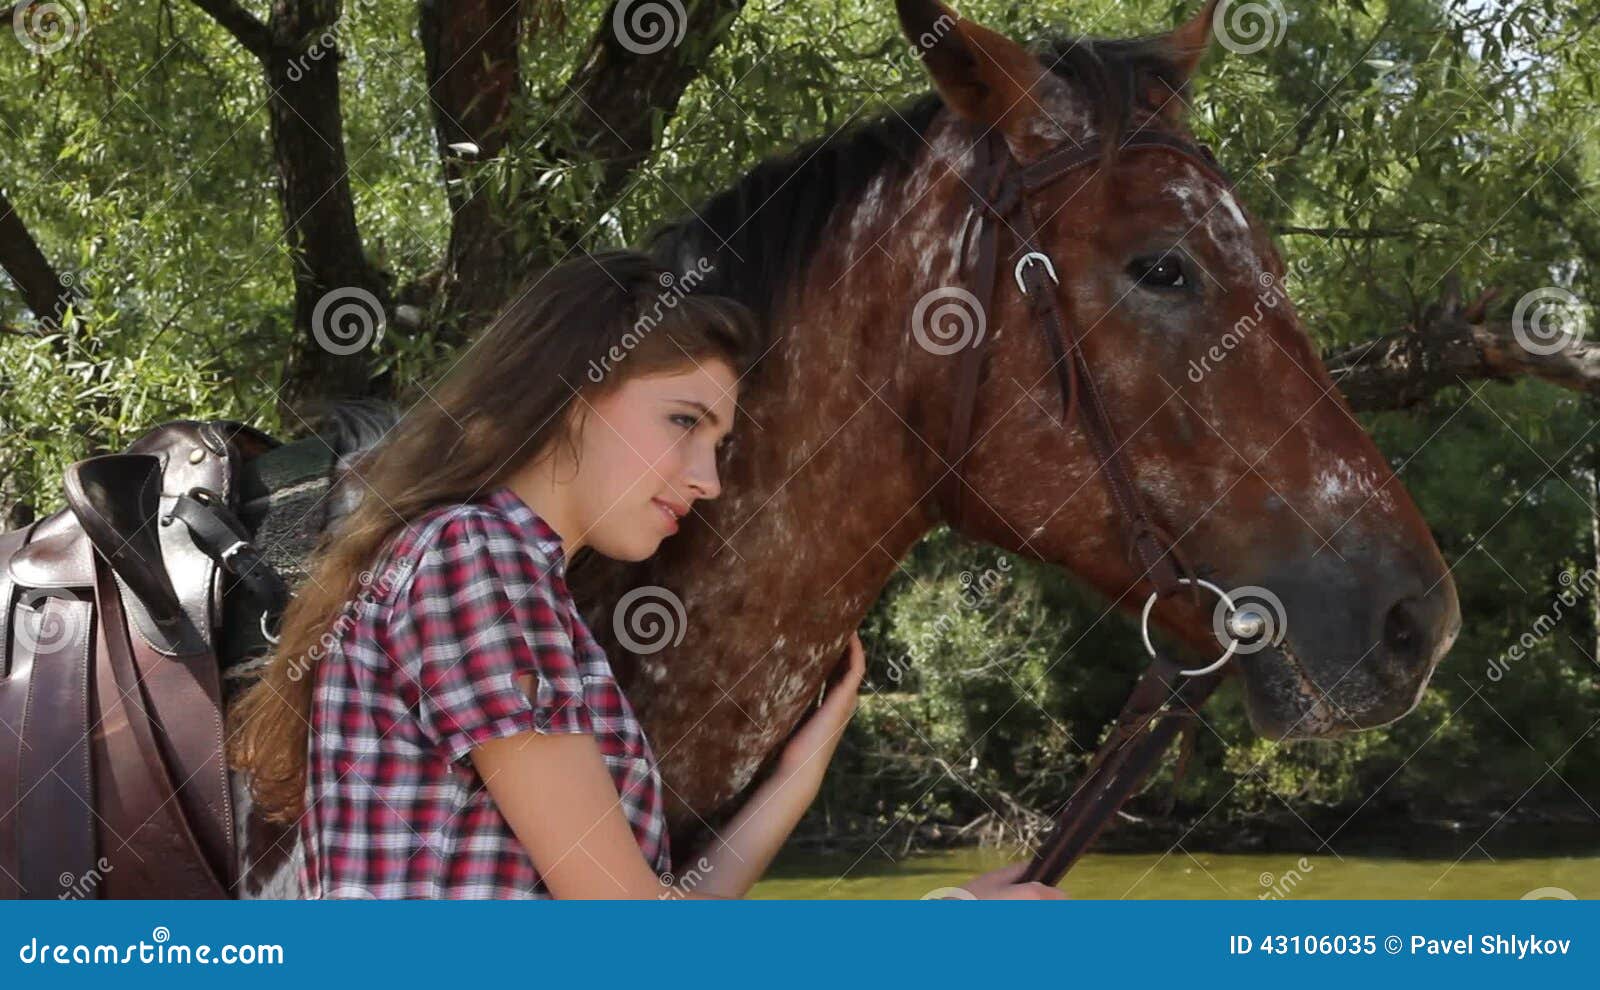 Cavalo cmendo mulher